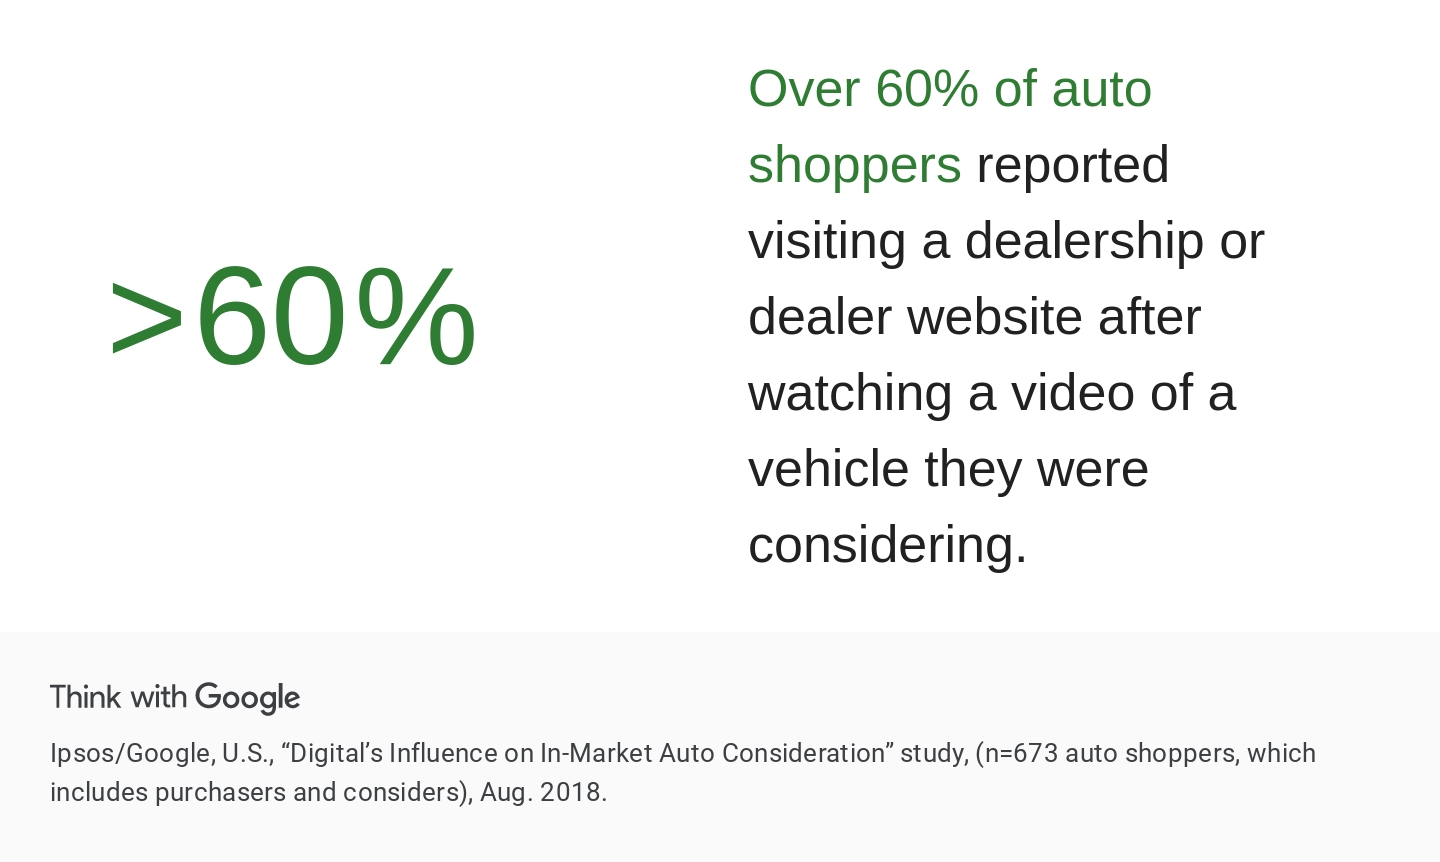 Auto shopper journey statistics - Think with Google